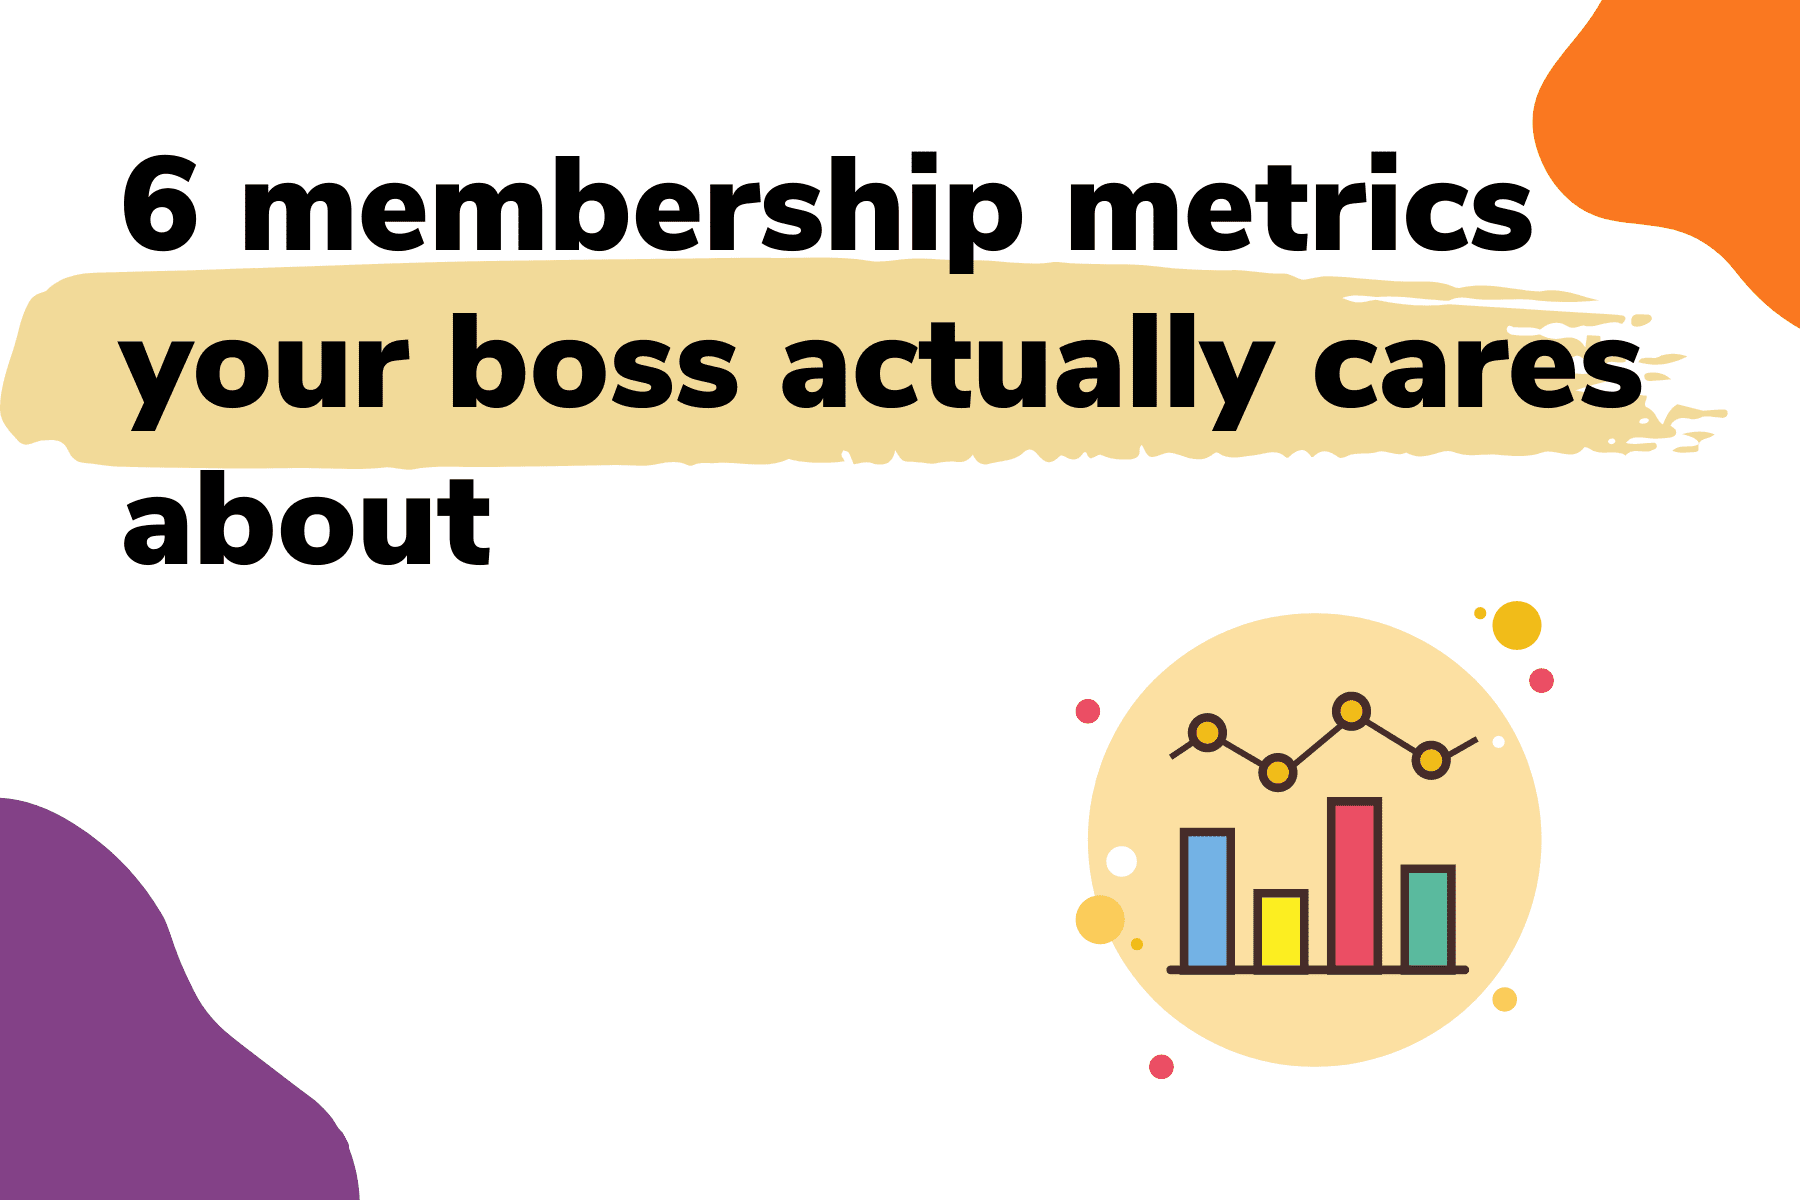 6 membership metrics your boss actually cares about